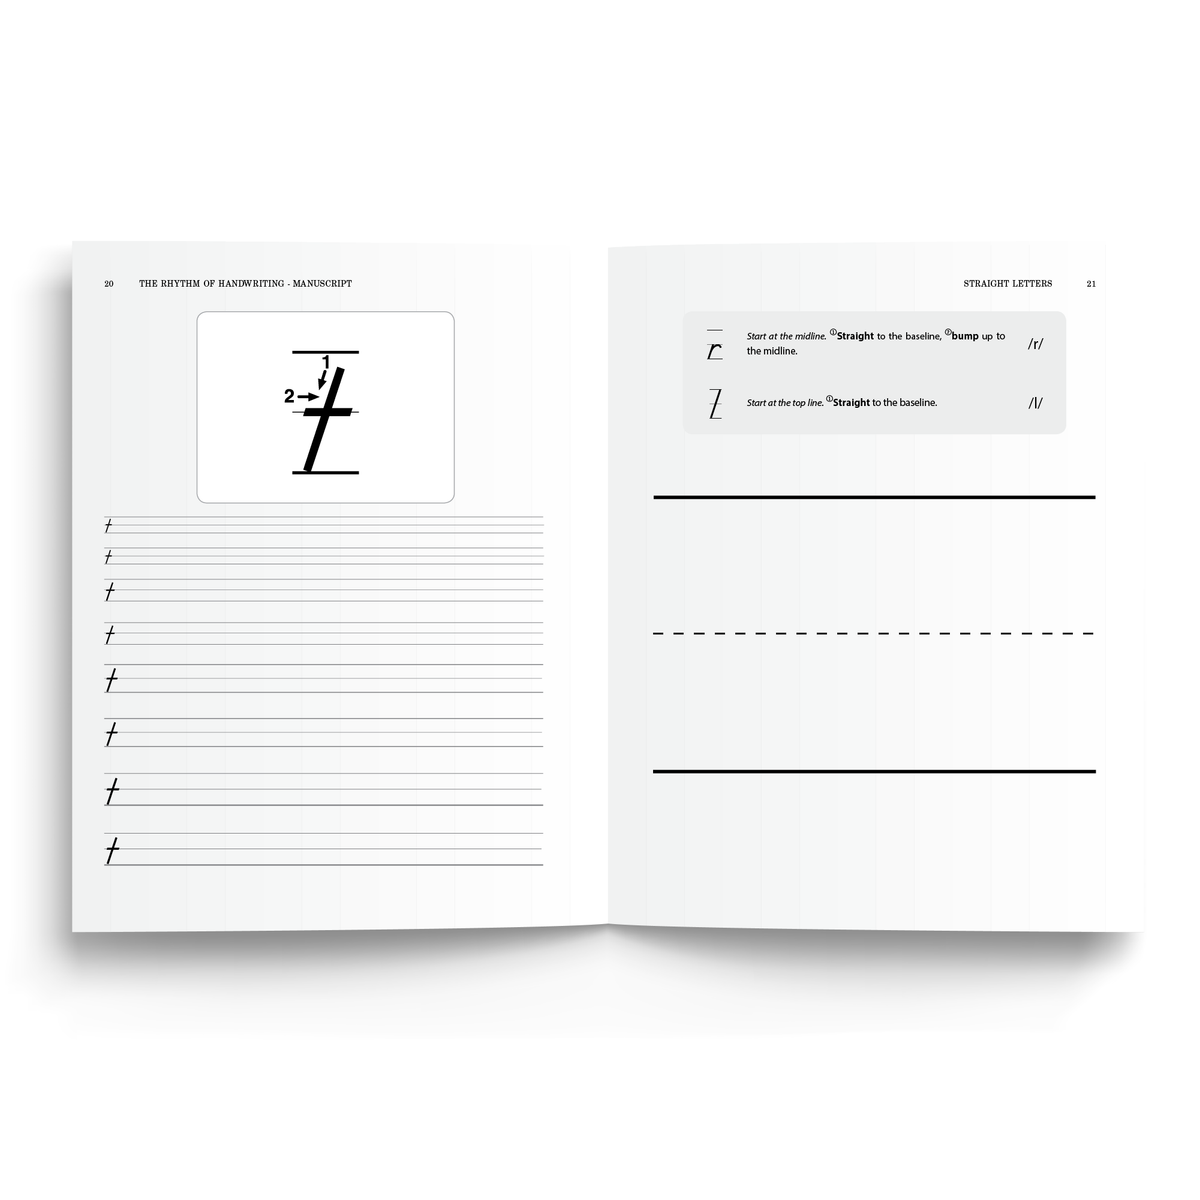 Handwriting Beginner Book B Pupil Edition